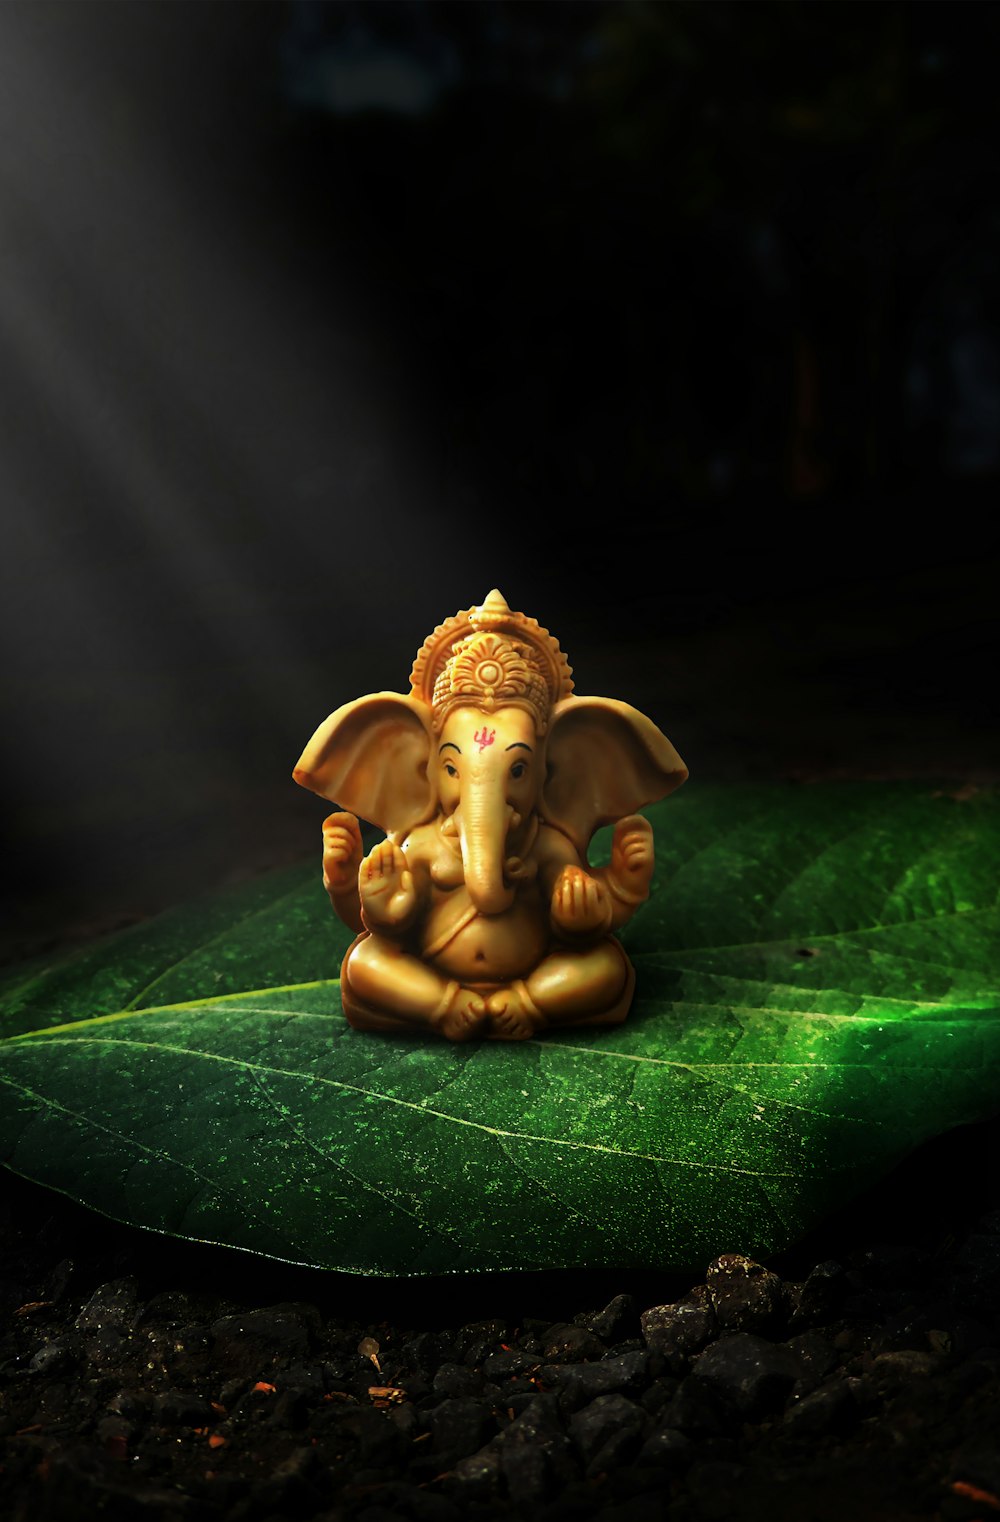 500+ Ganesh Pictures [HD] | Download Free Images on Unsplash